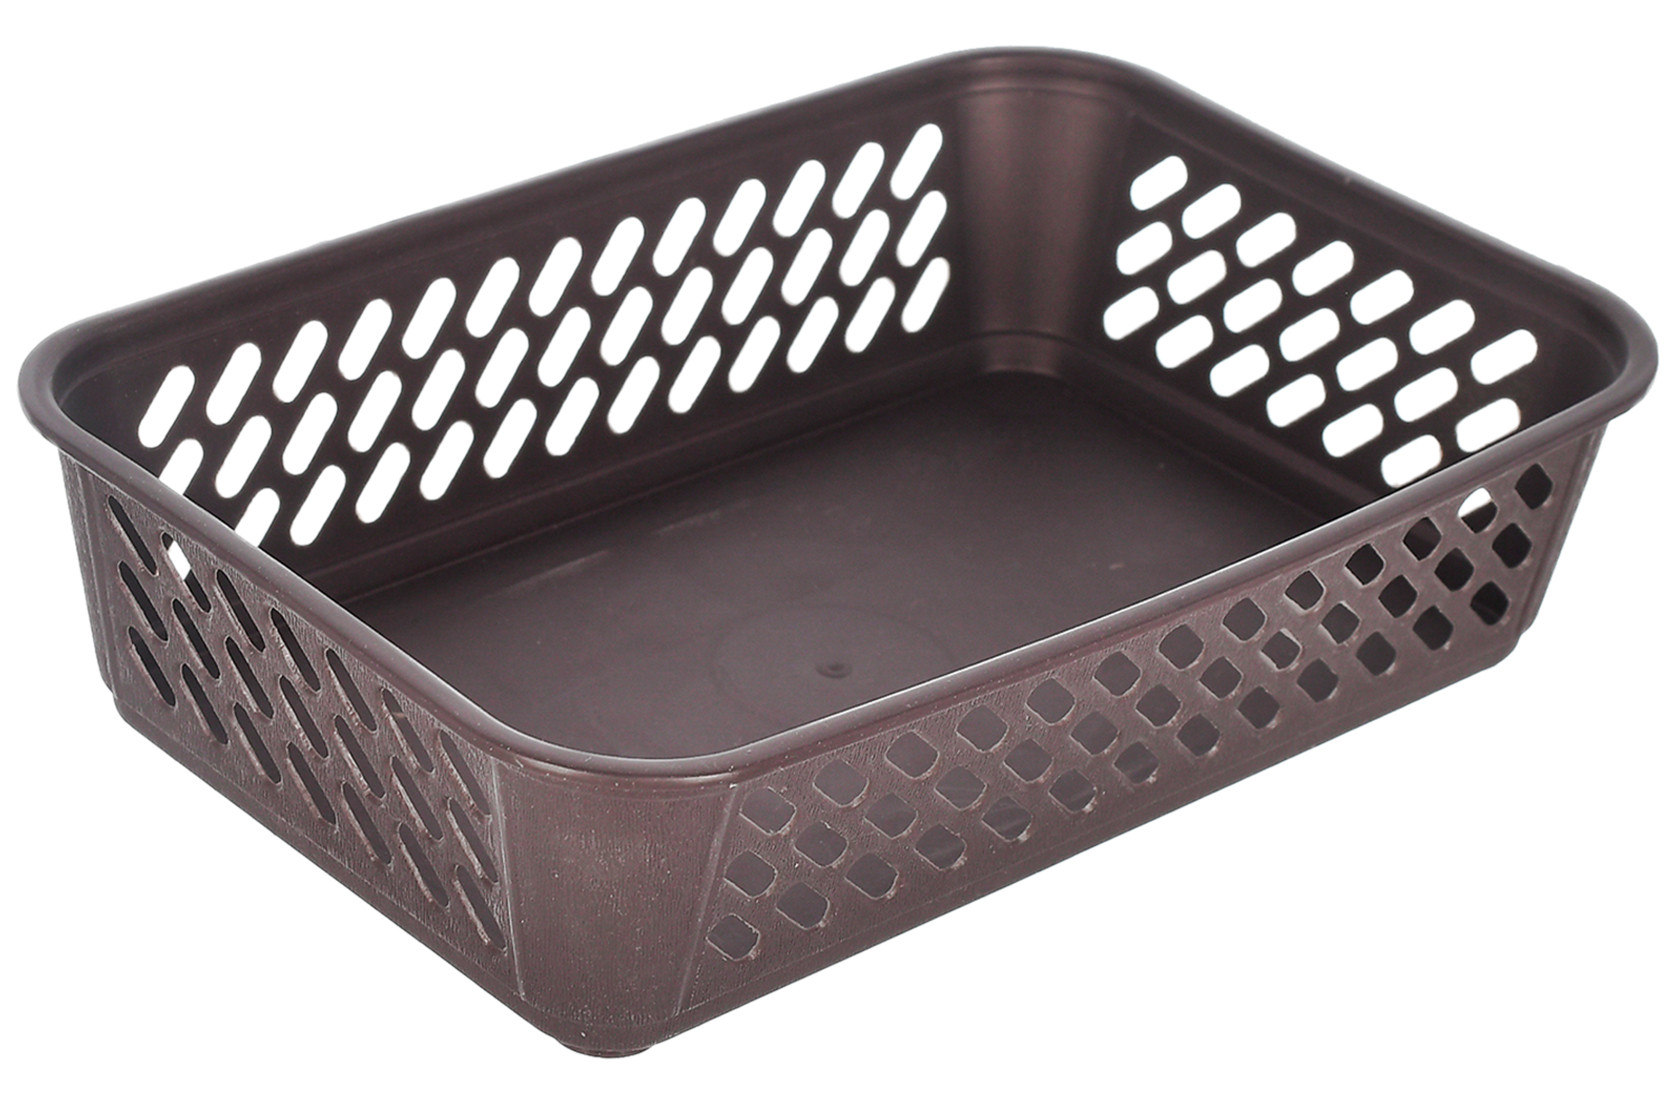 Kuber Industries Multiuses Super Tidy Plastic Tray/Basket/Organizer- Pack of 3 (Brown & Grey & Brown) -46KM0585